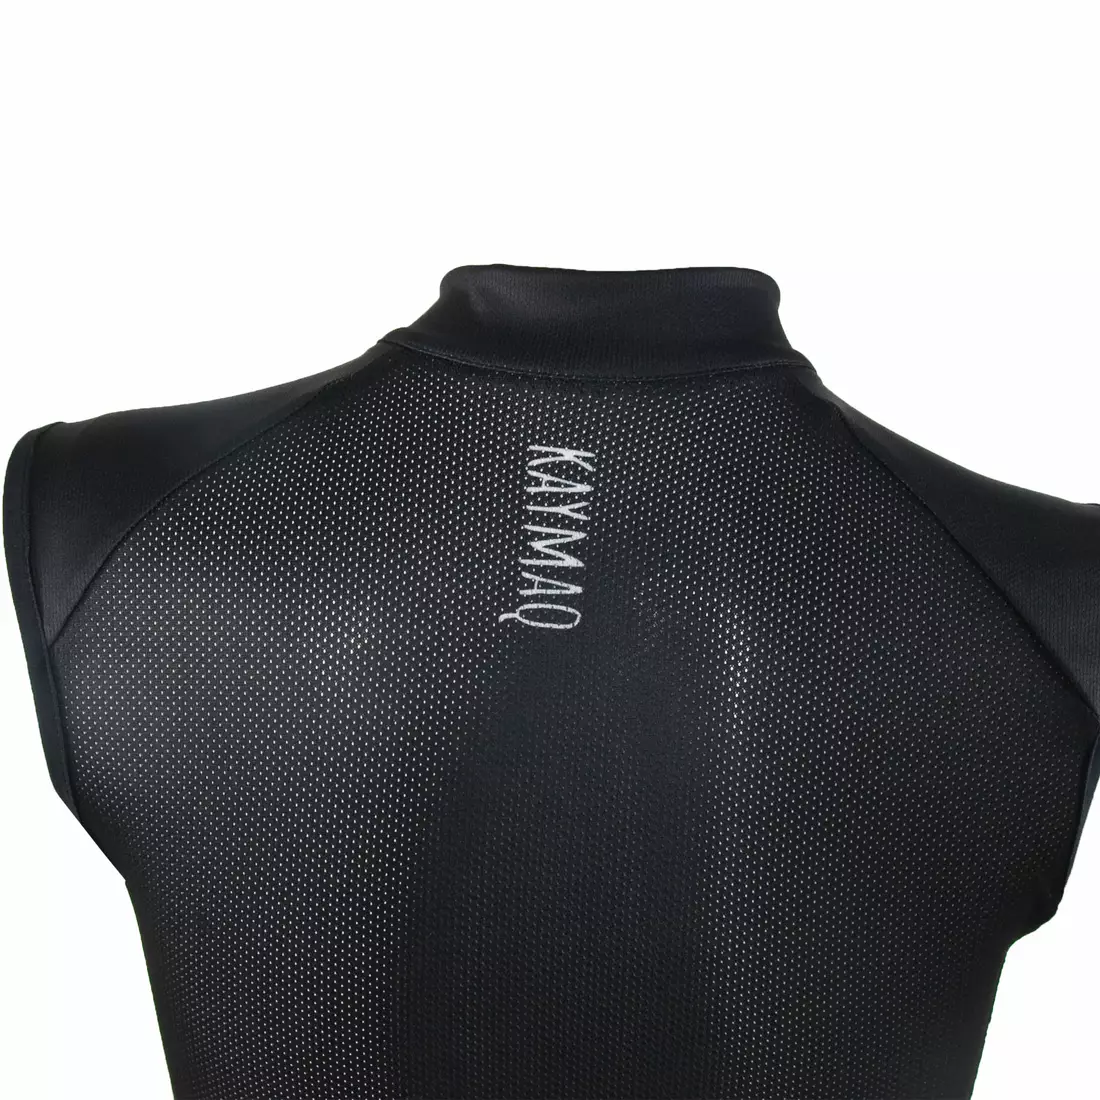 KAYMAQ SLEEVELESS dámský cyklistický dres bez rukávů 01.218, černý